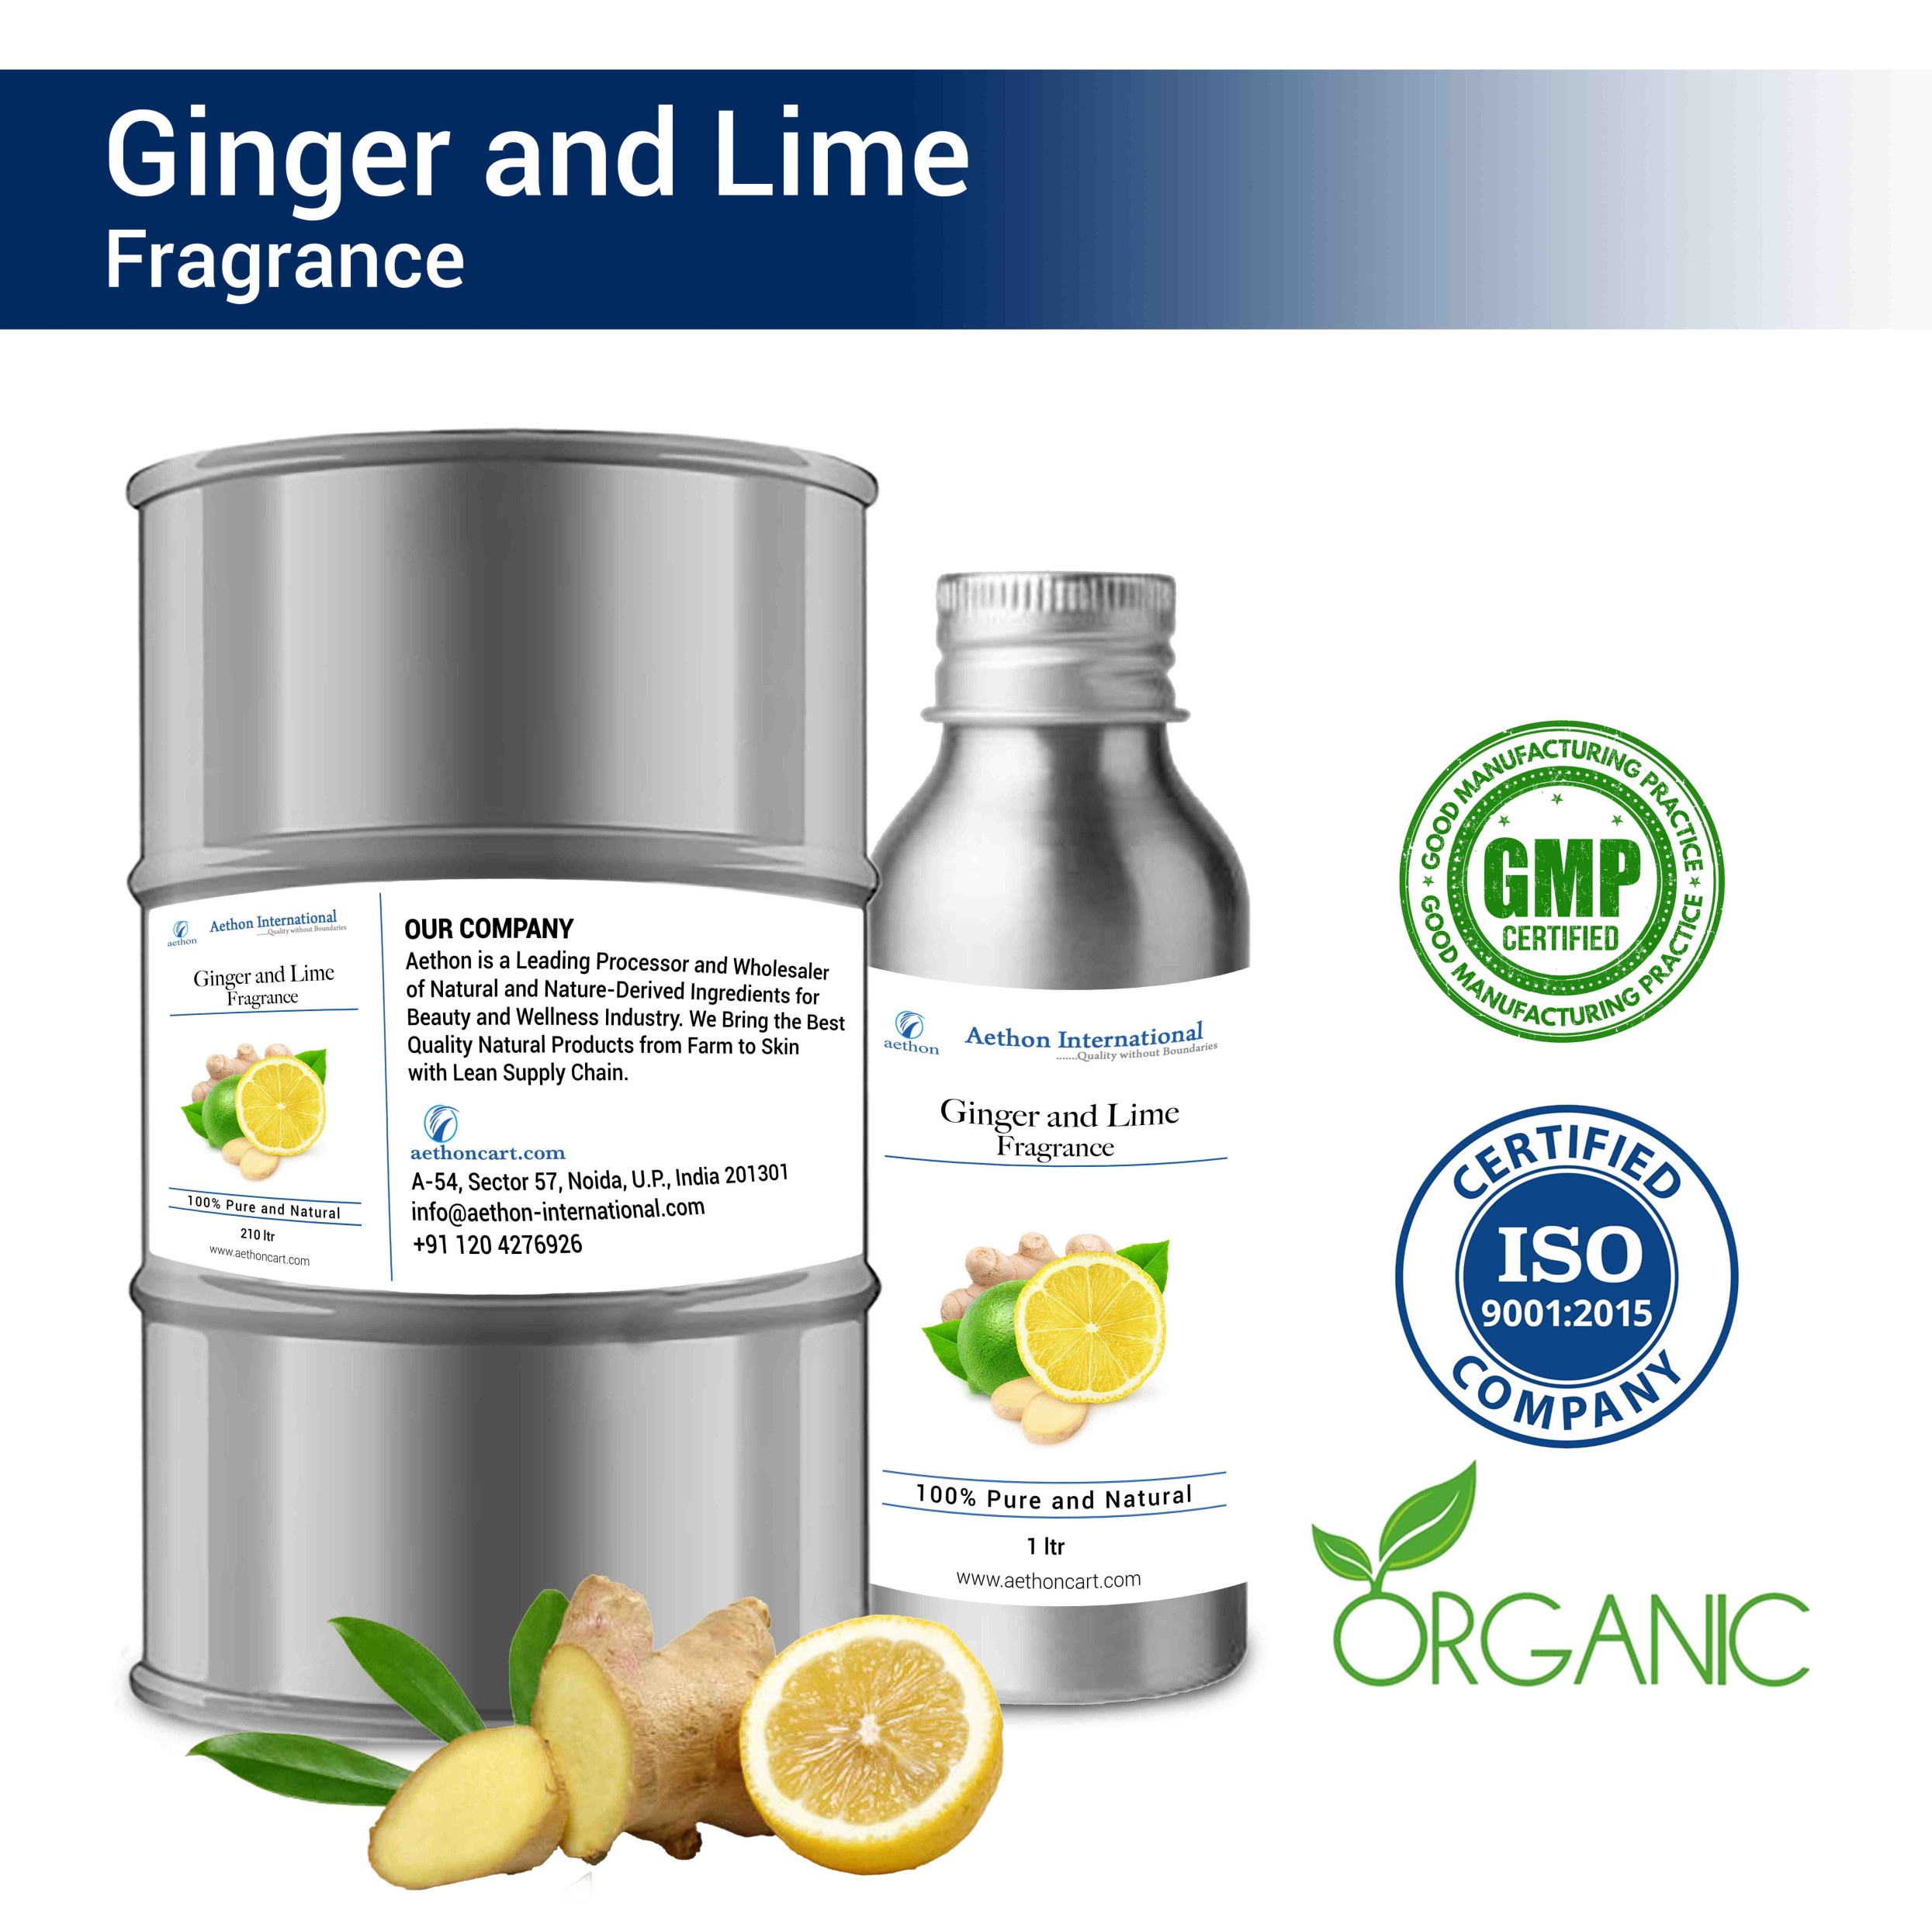 Ginger and Lime Fragrance